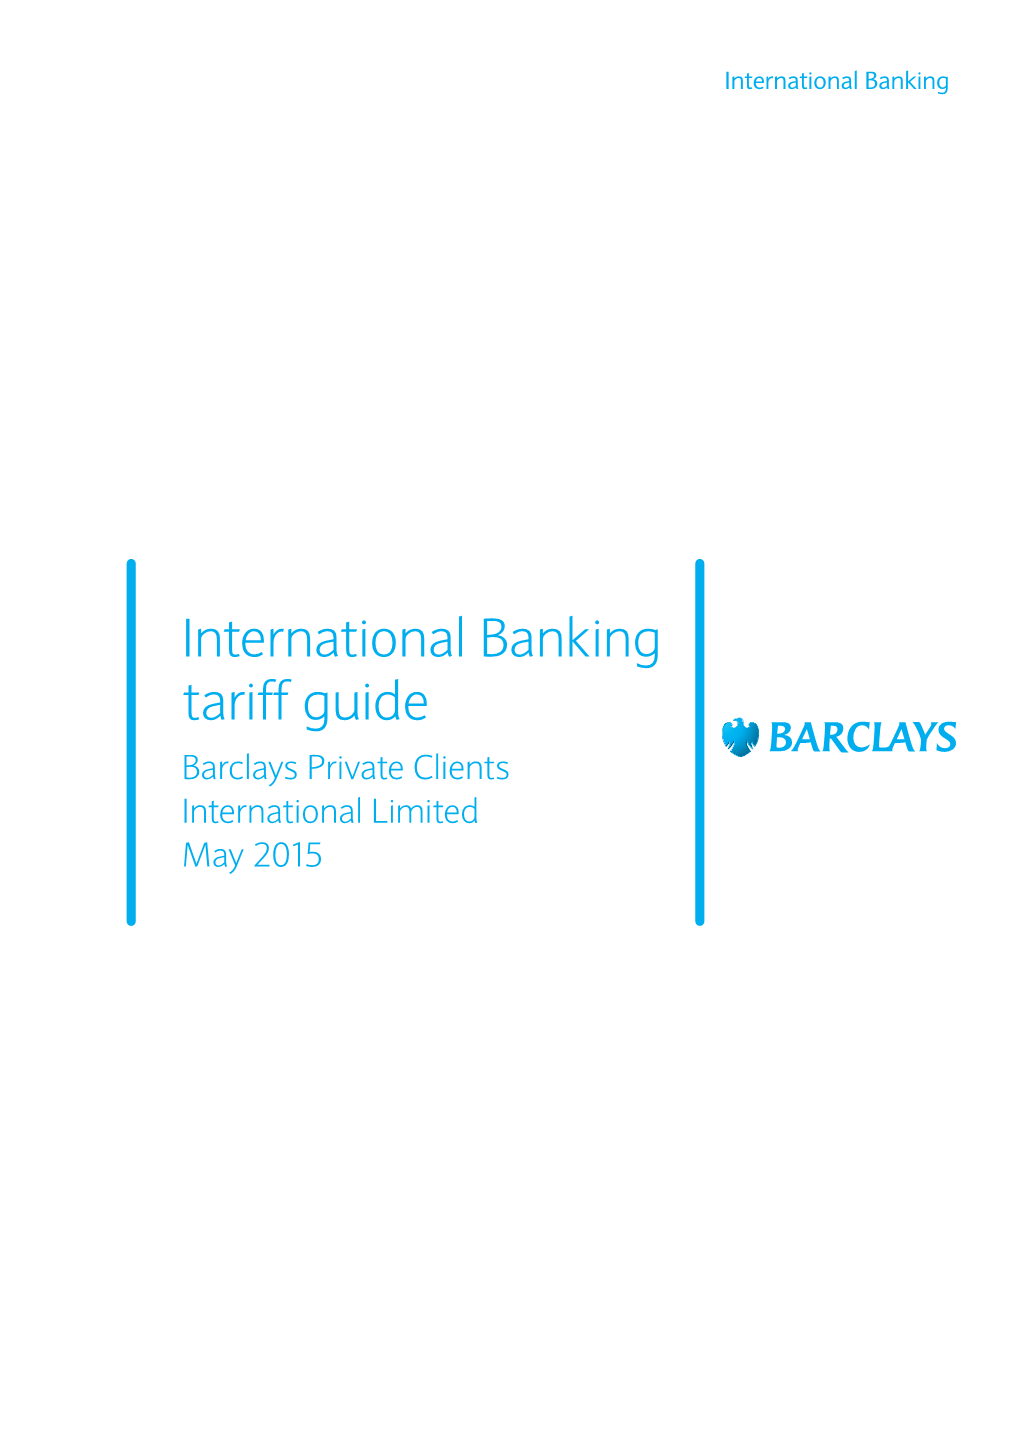 Barclays International Banking Tariffs Guide